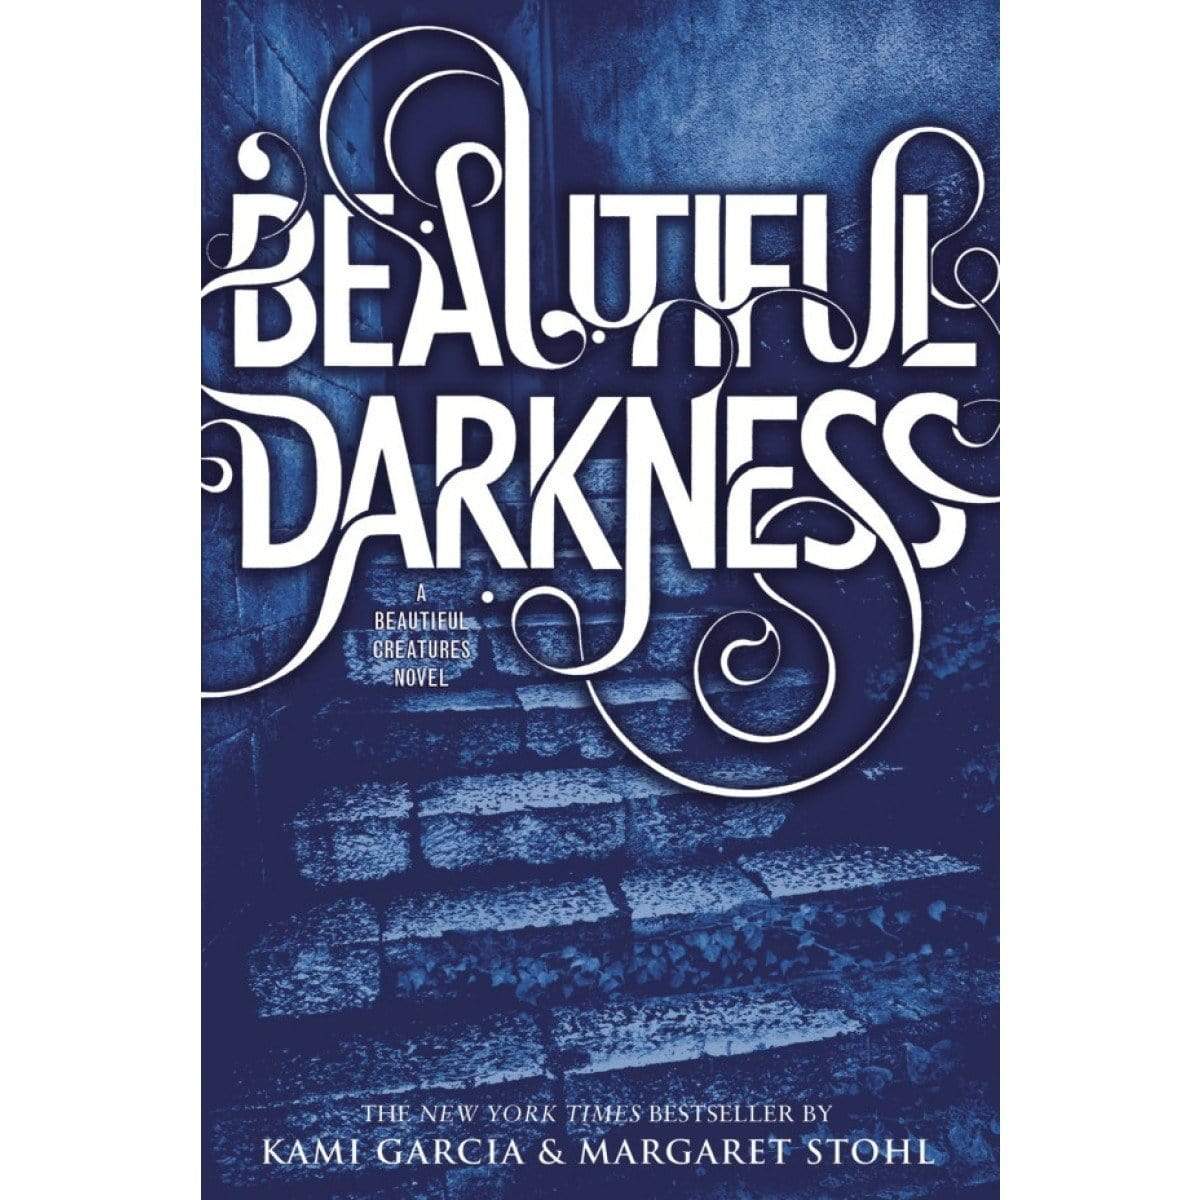 Beautiful Darkness (A Beautiful Creatures Book 2)